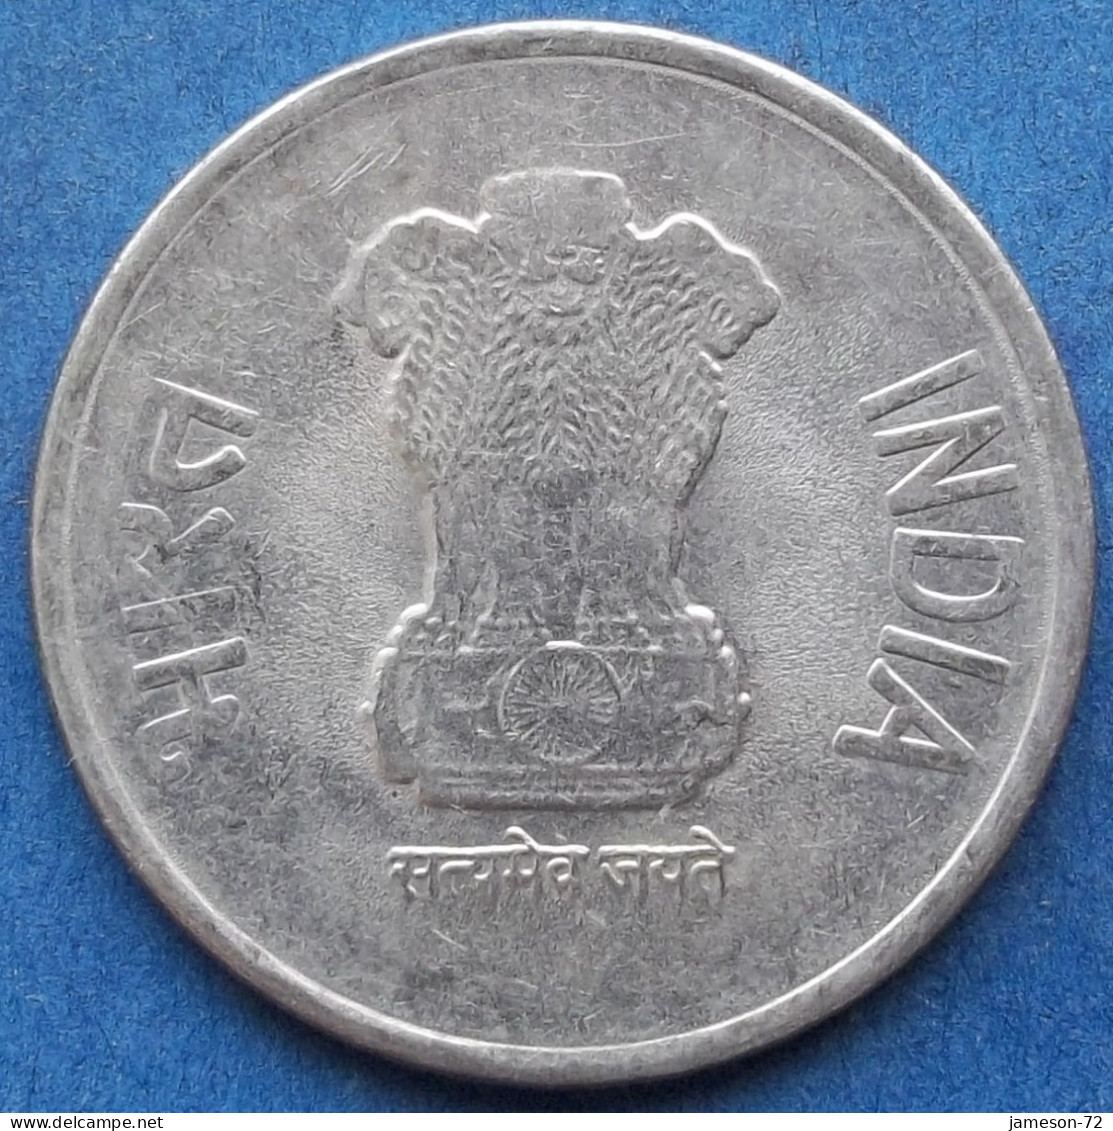 INDIA - 2 Rupees 2019 "Lotus Flowers" KM# 395 Republic Decimal Coinage (1957) - Edelweiss Coins - Géorgie